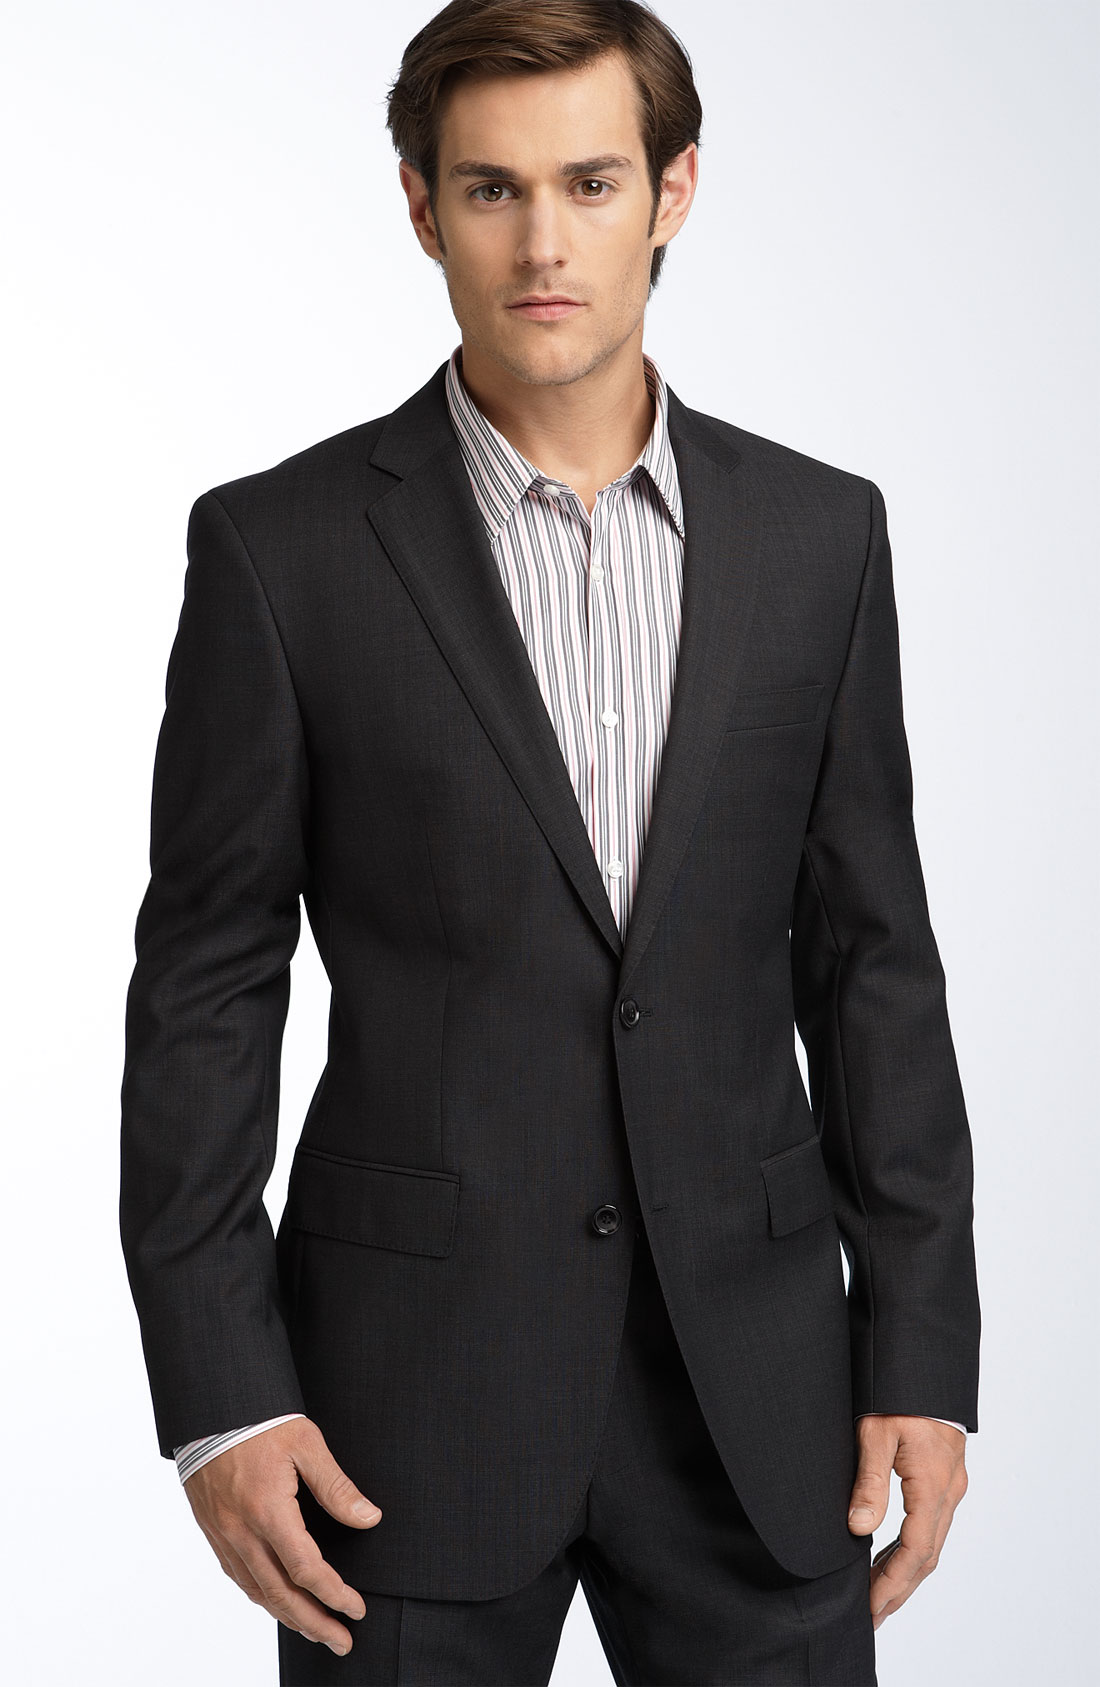 Hugo Boss 'James/Sharp' Trim Fit Grey Virgin Wool Suit in Gray for Men